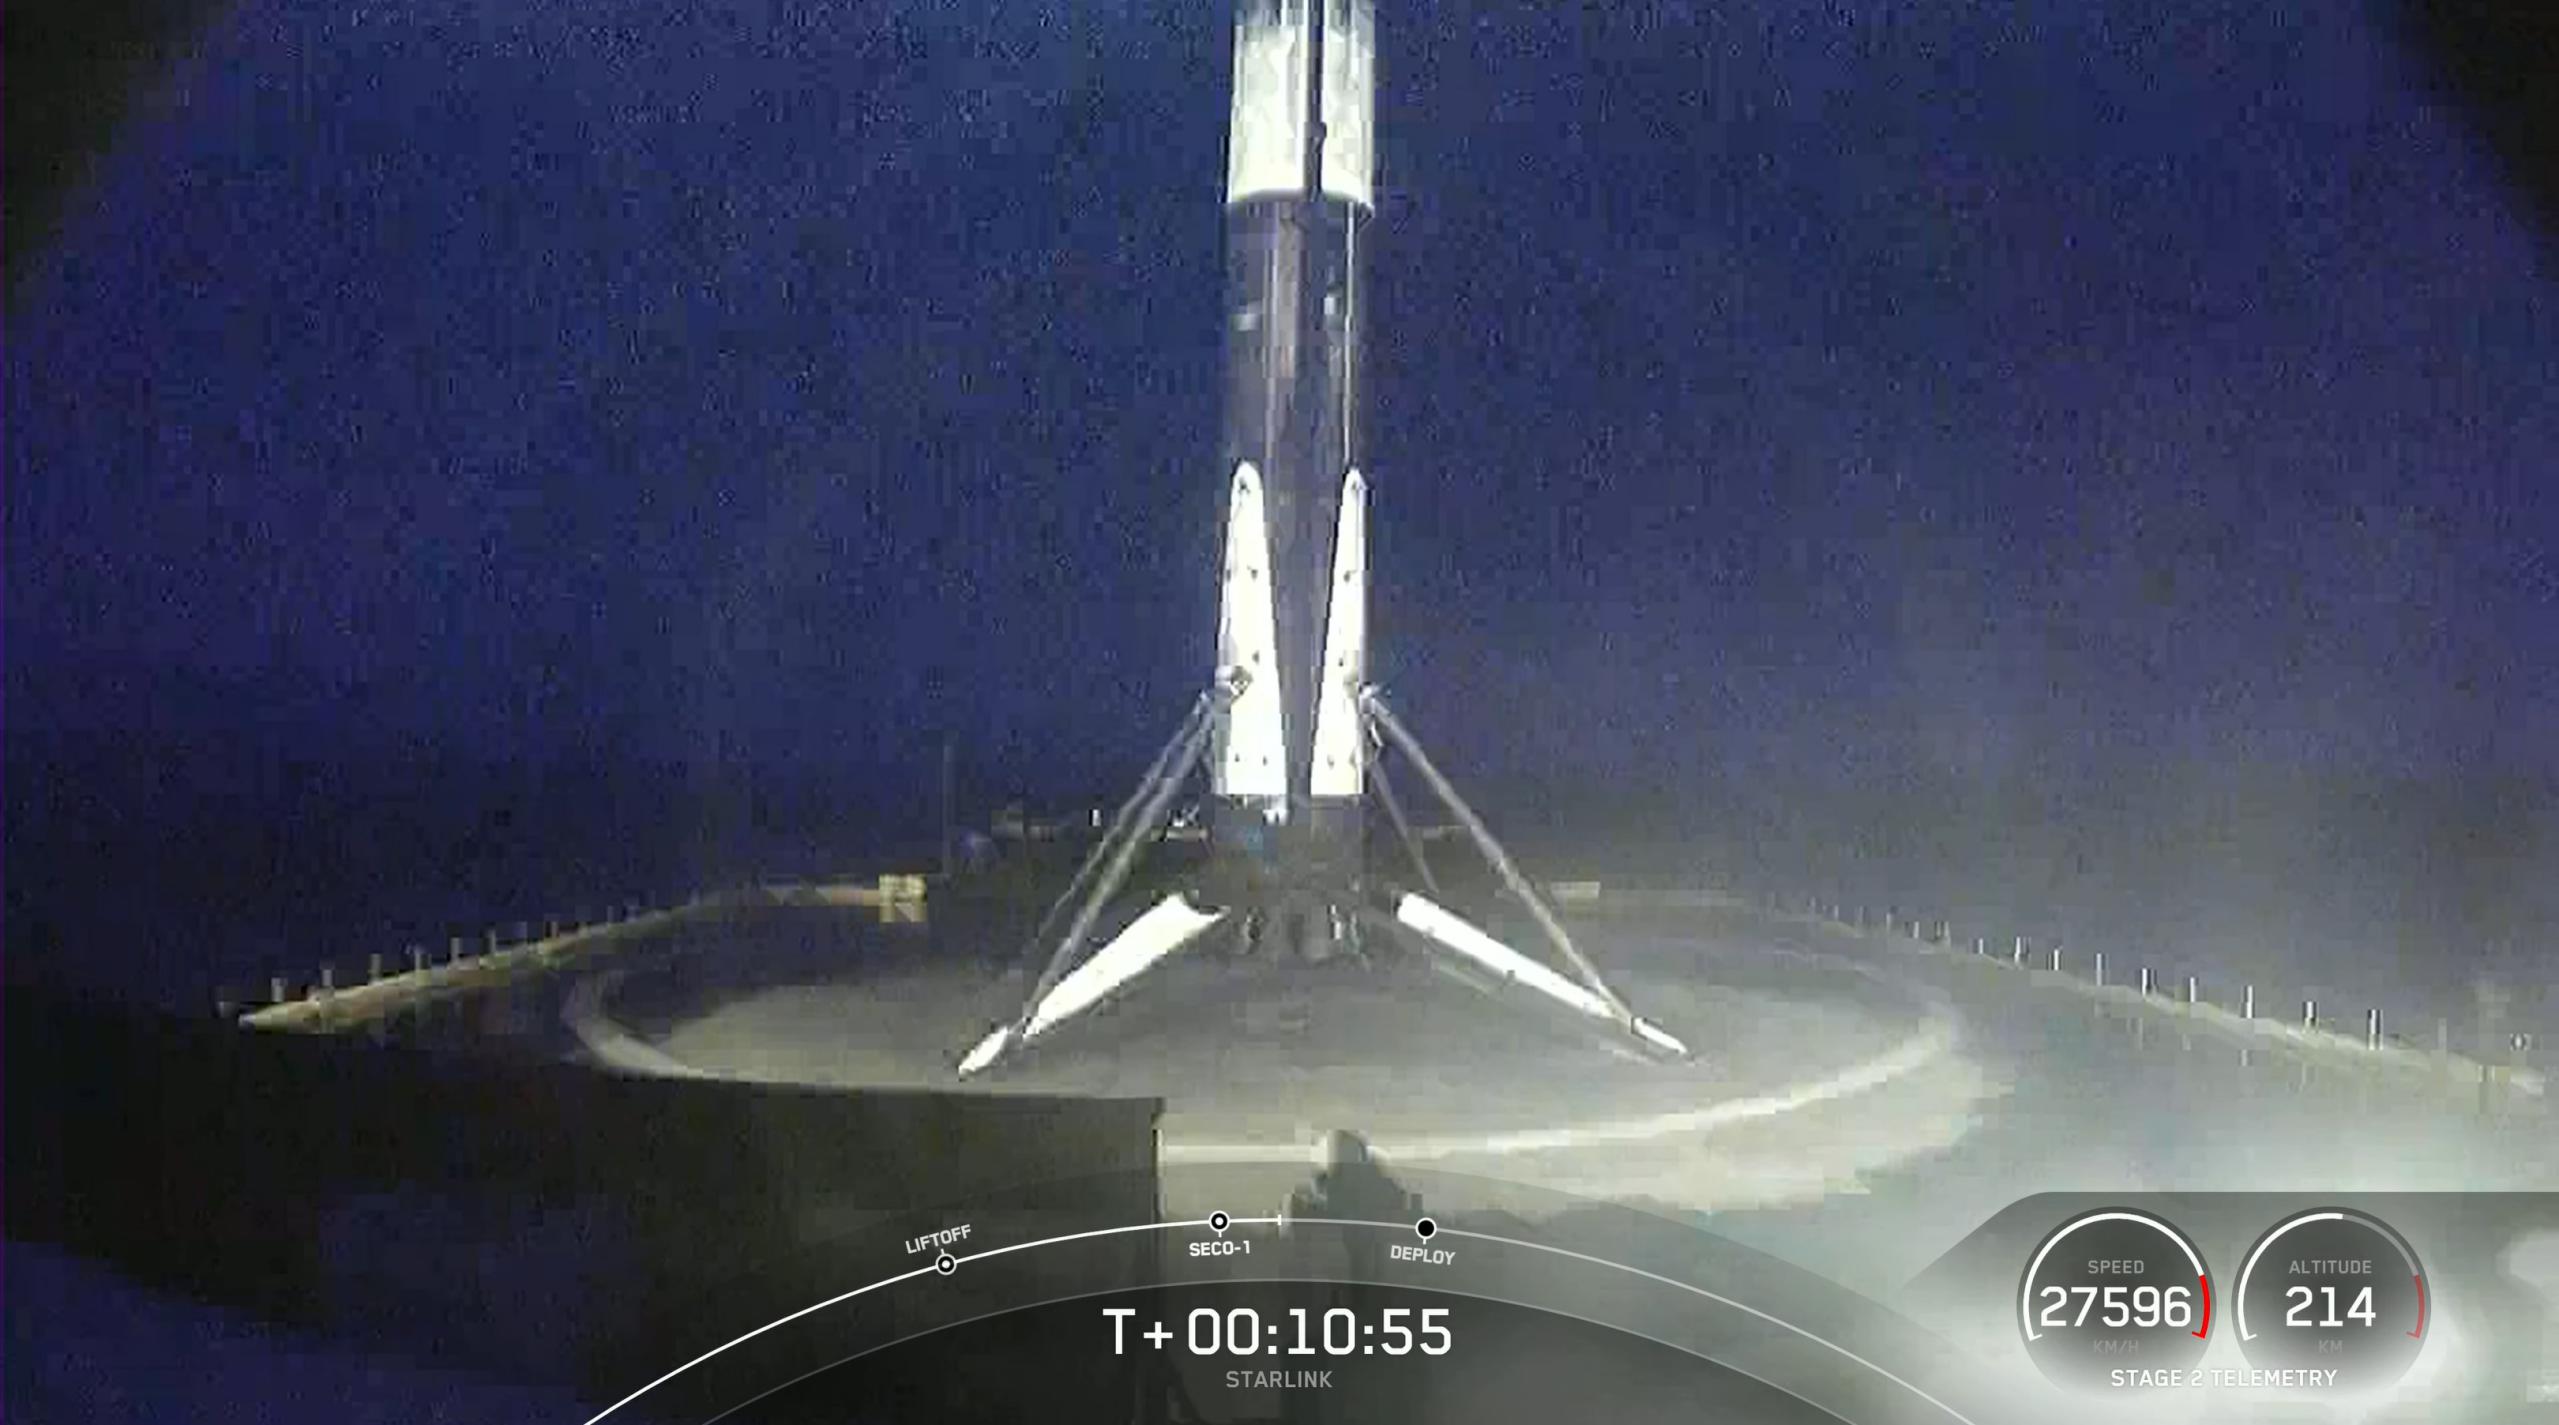 Starlink 2-1 V1.5 F9 B1049 091321 webcast (SpaceX) OCISLY landing 2 (c)